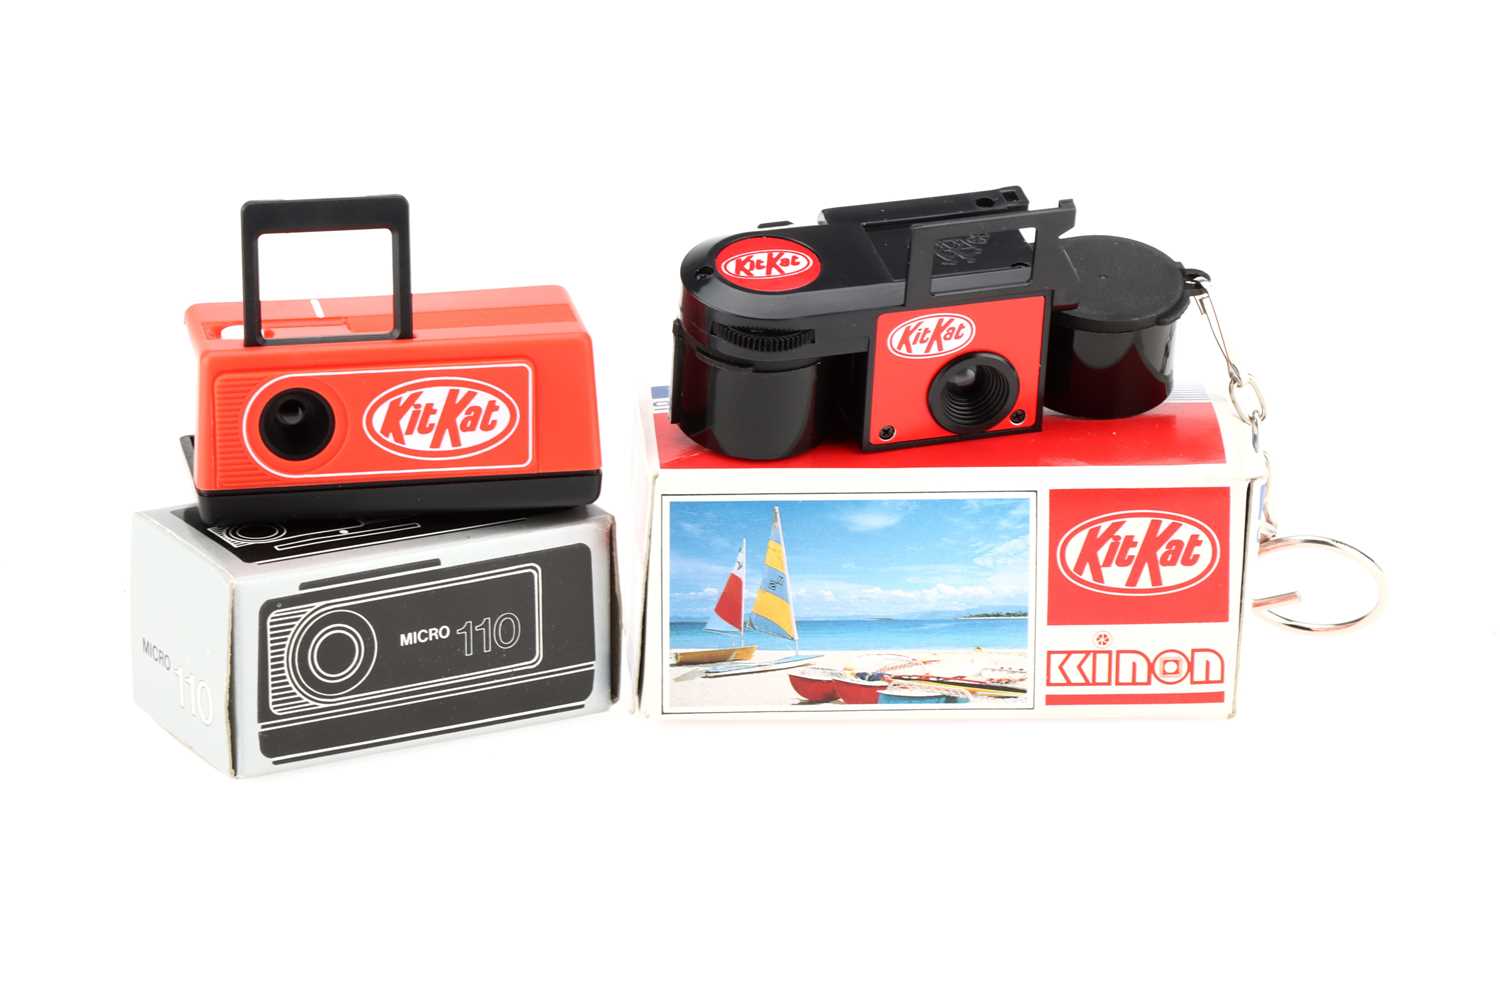 Lot 597 - Two Promotional 110 Kit Kat Cameras